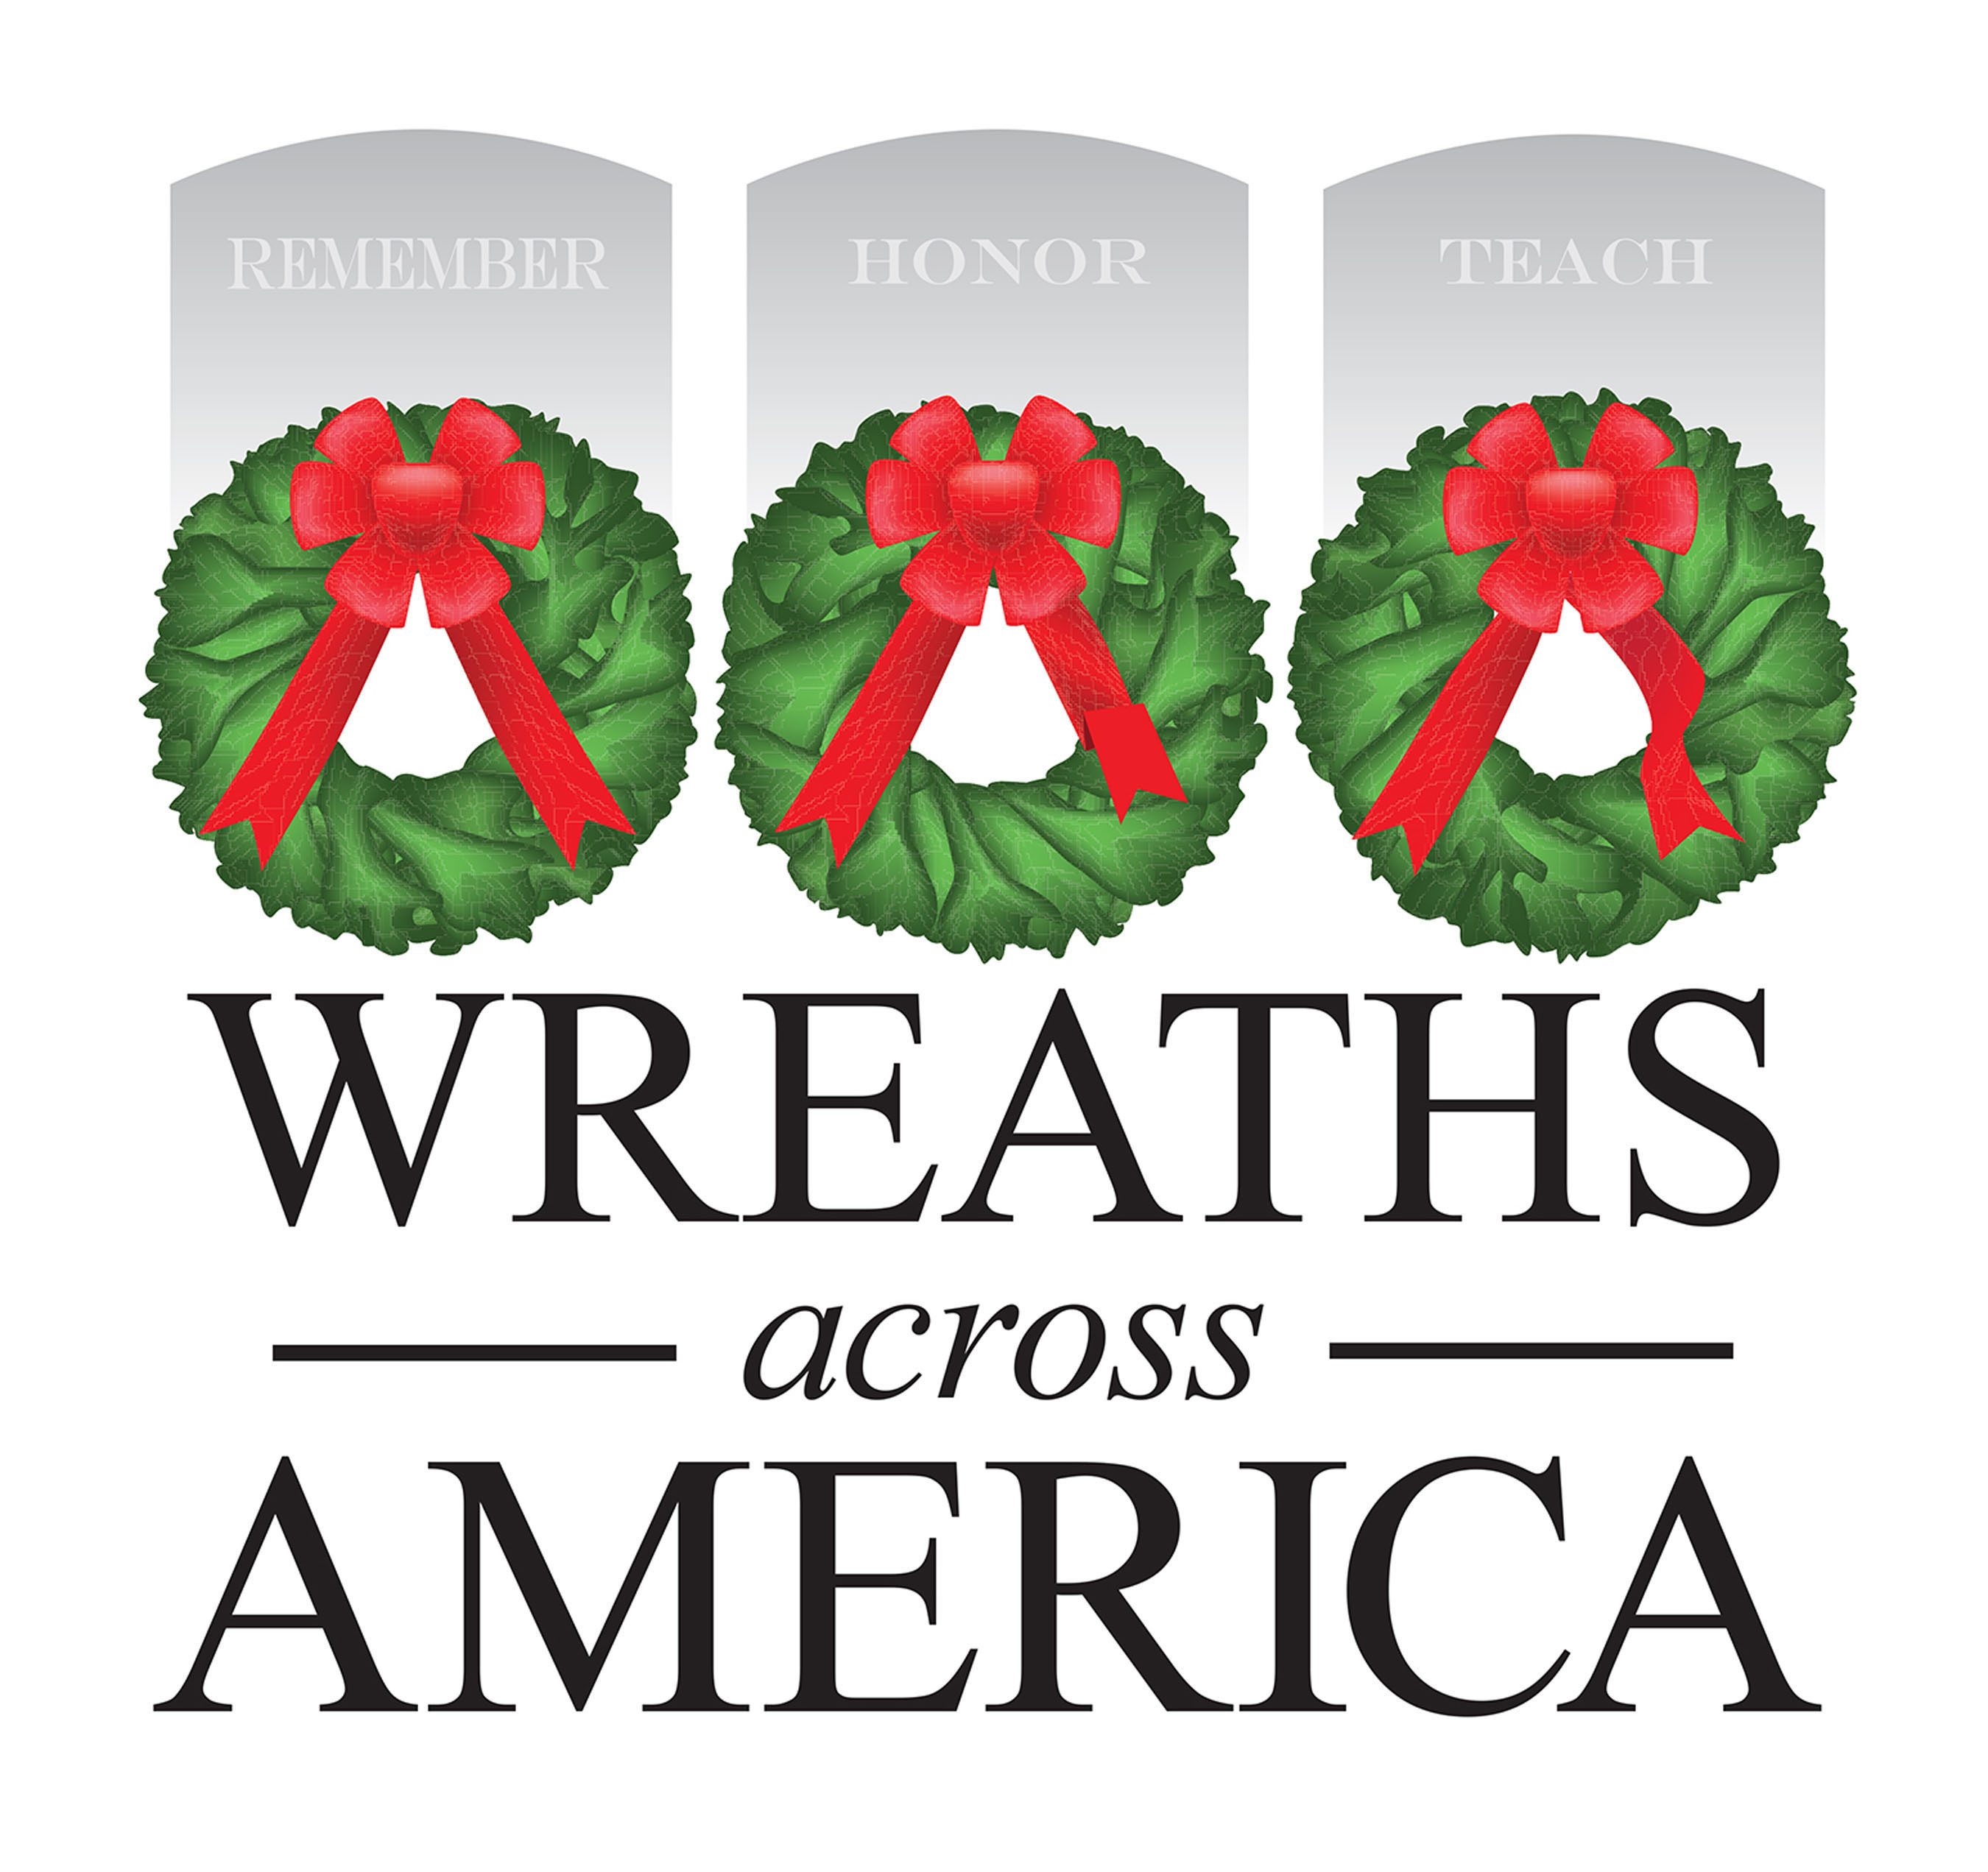 www.wreathsacrossamerica.org